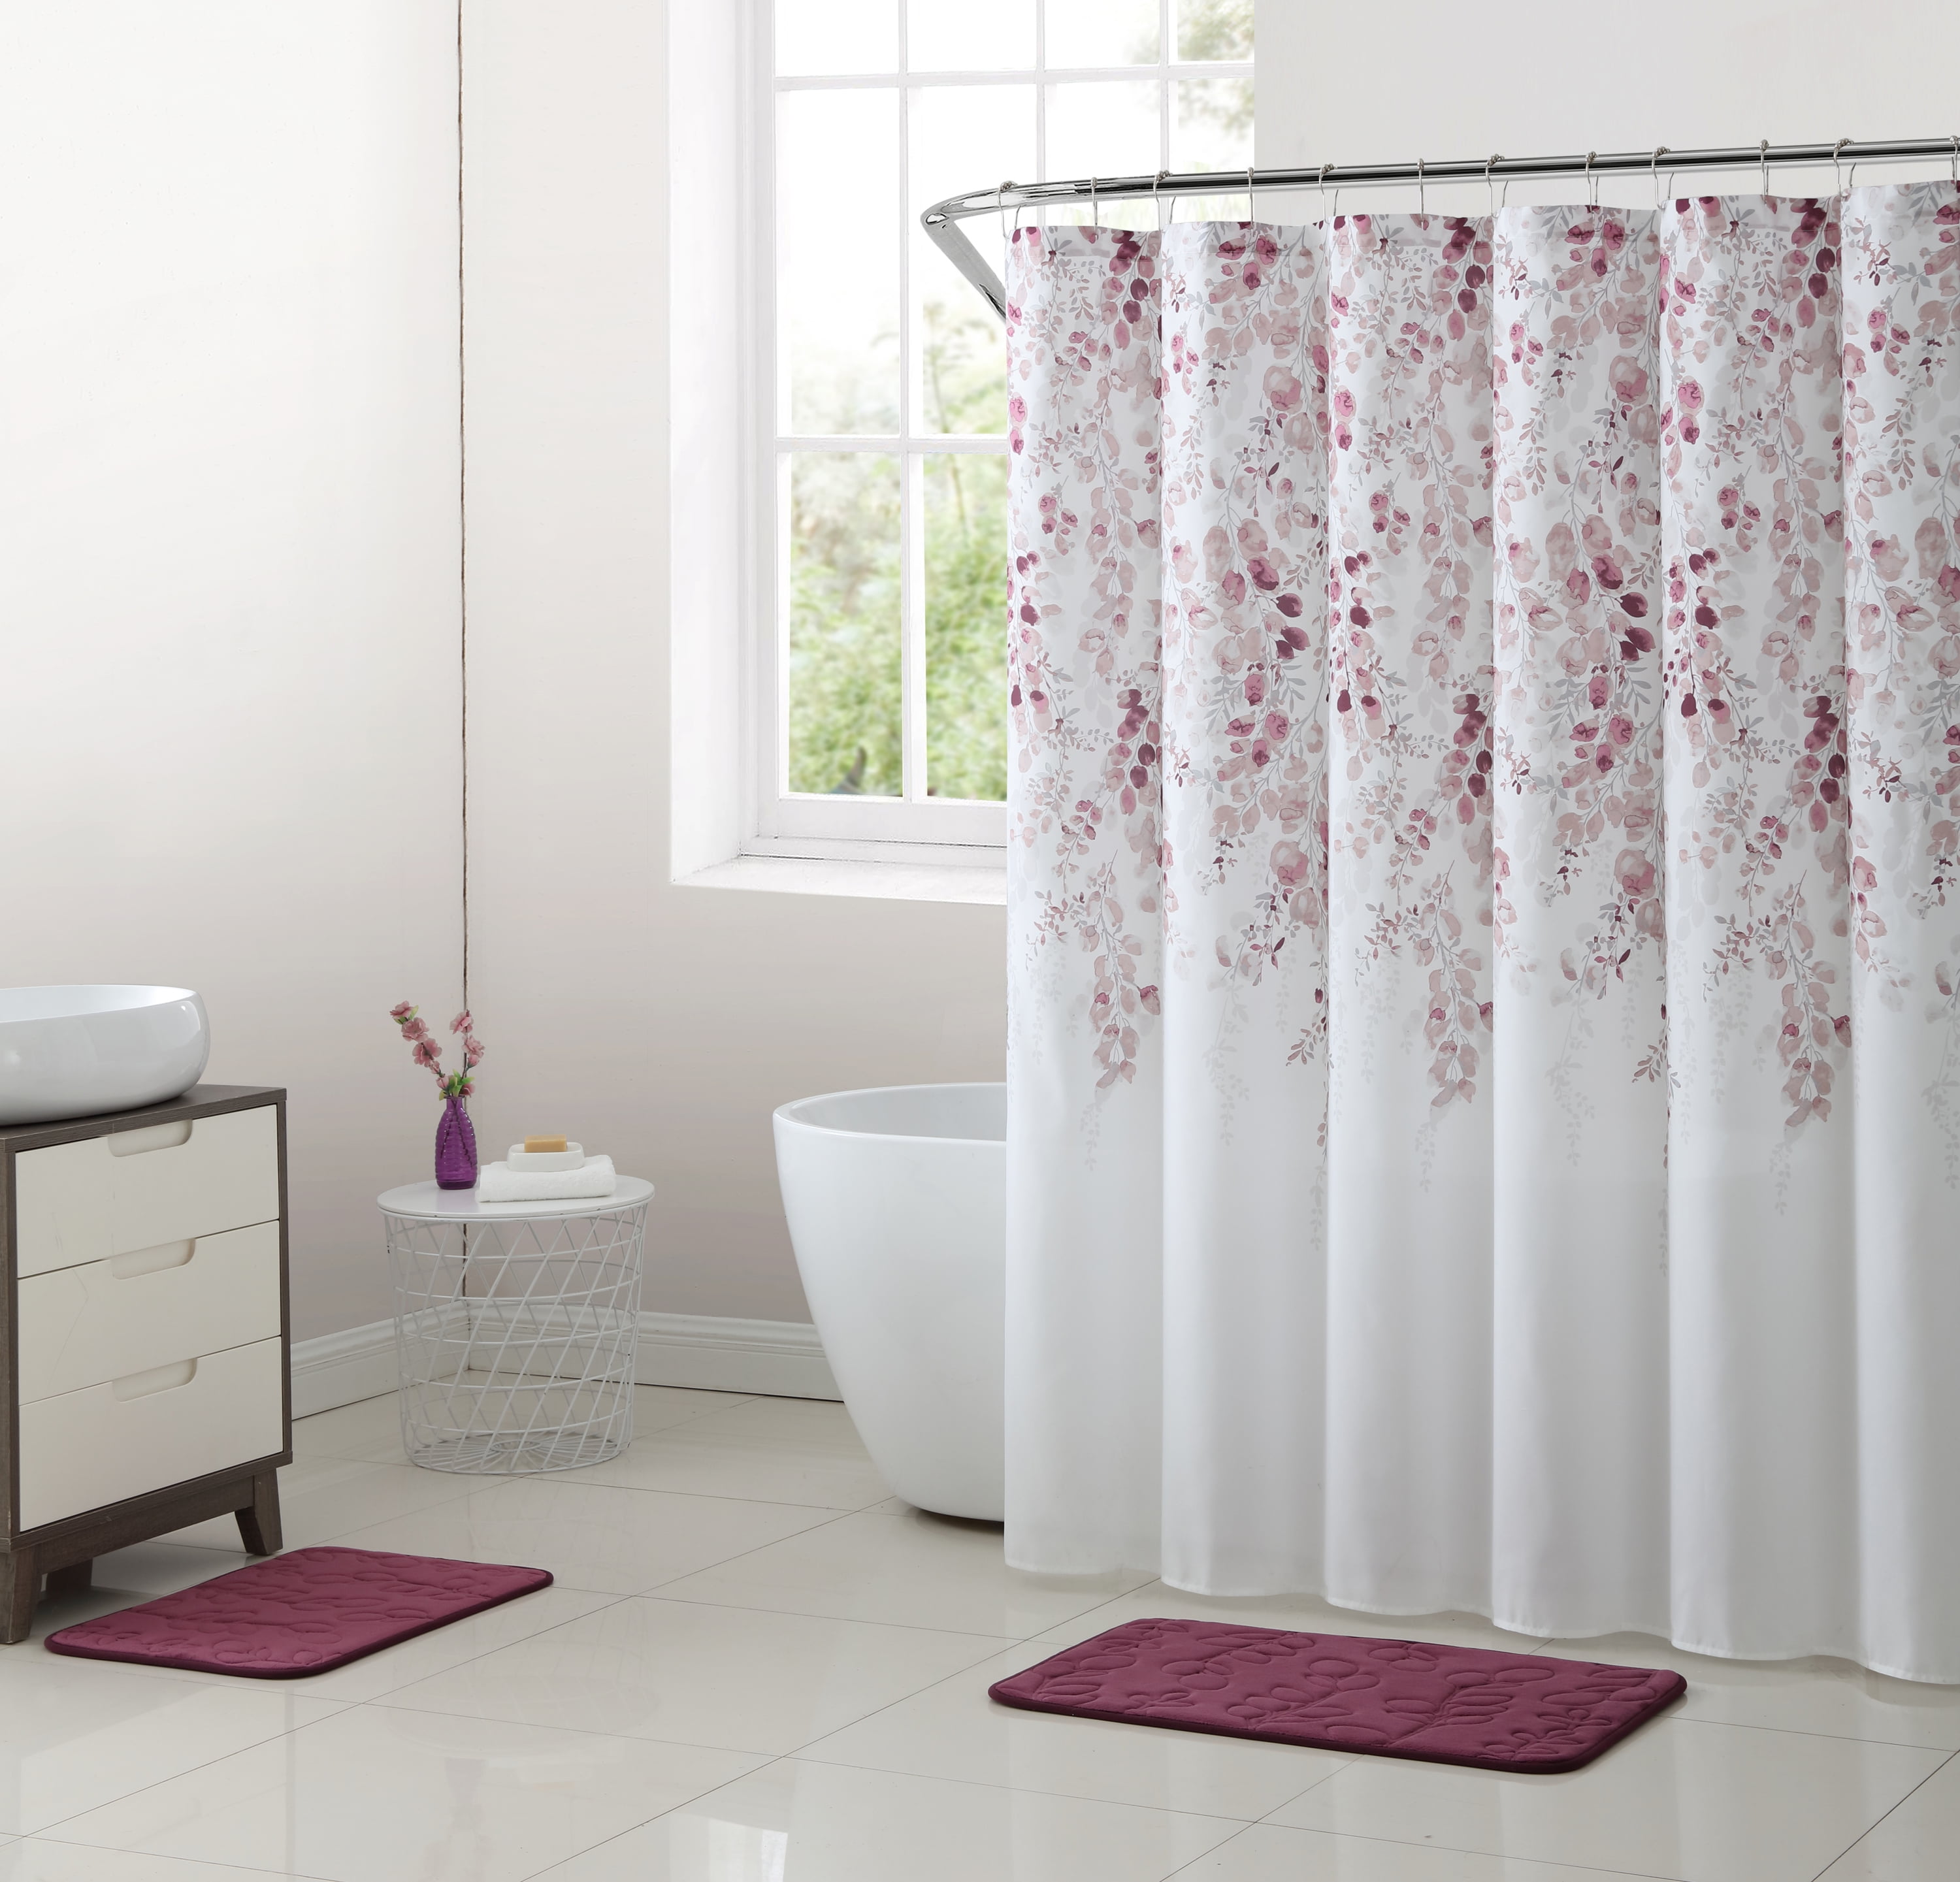 Wisteria Flower Weeding Waterproof Bathroom Fabric Shower Curtain Set 71Inch